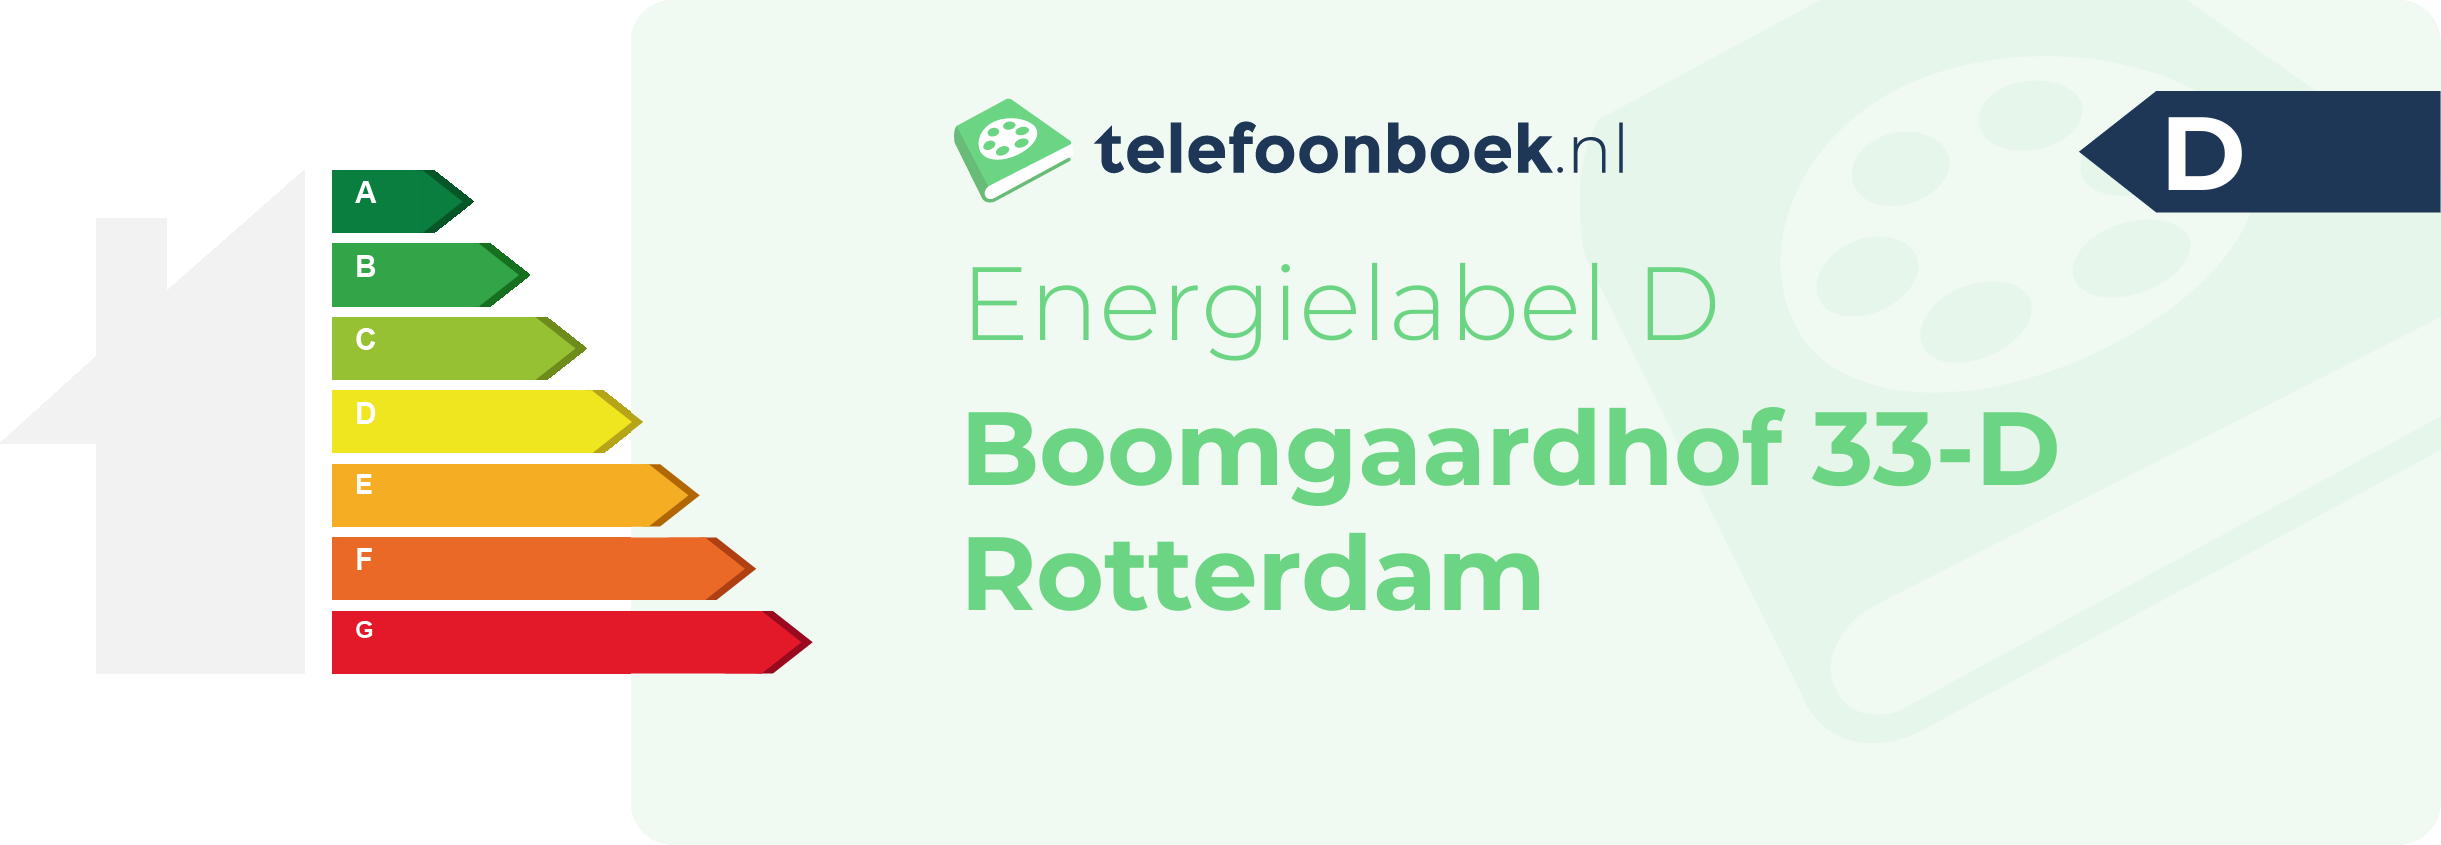 Energielabel Boomgaardhof 33-D Rotterdam